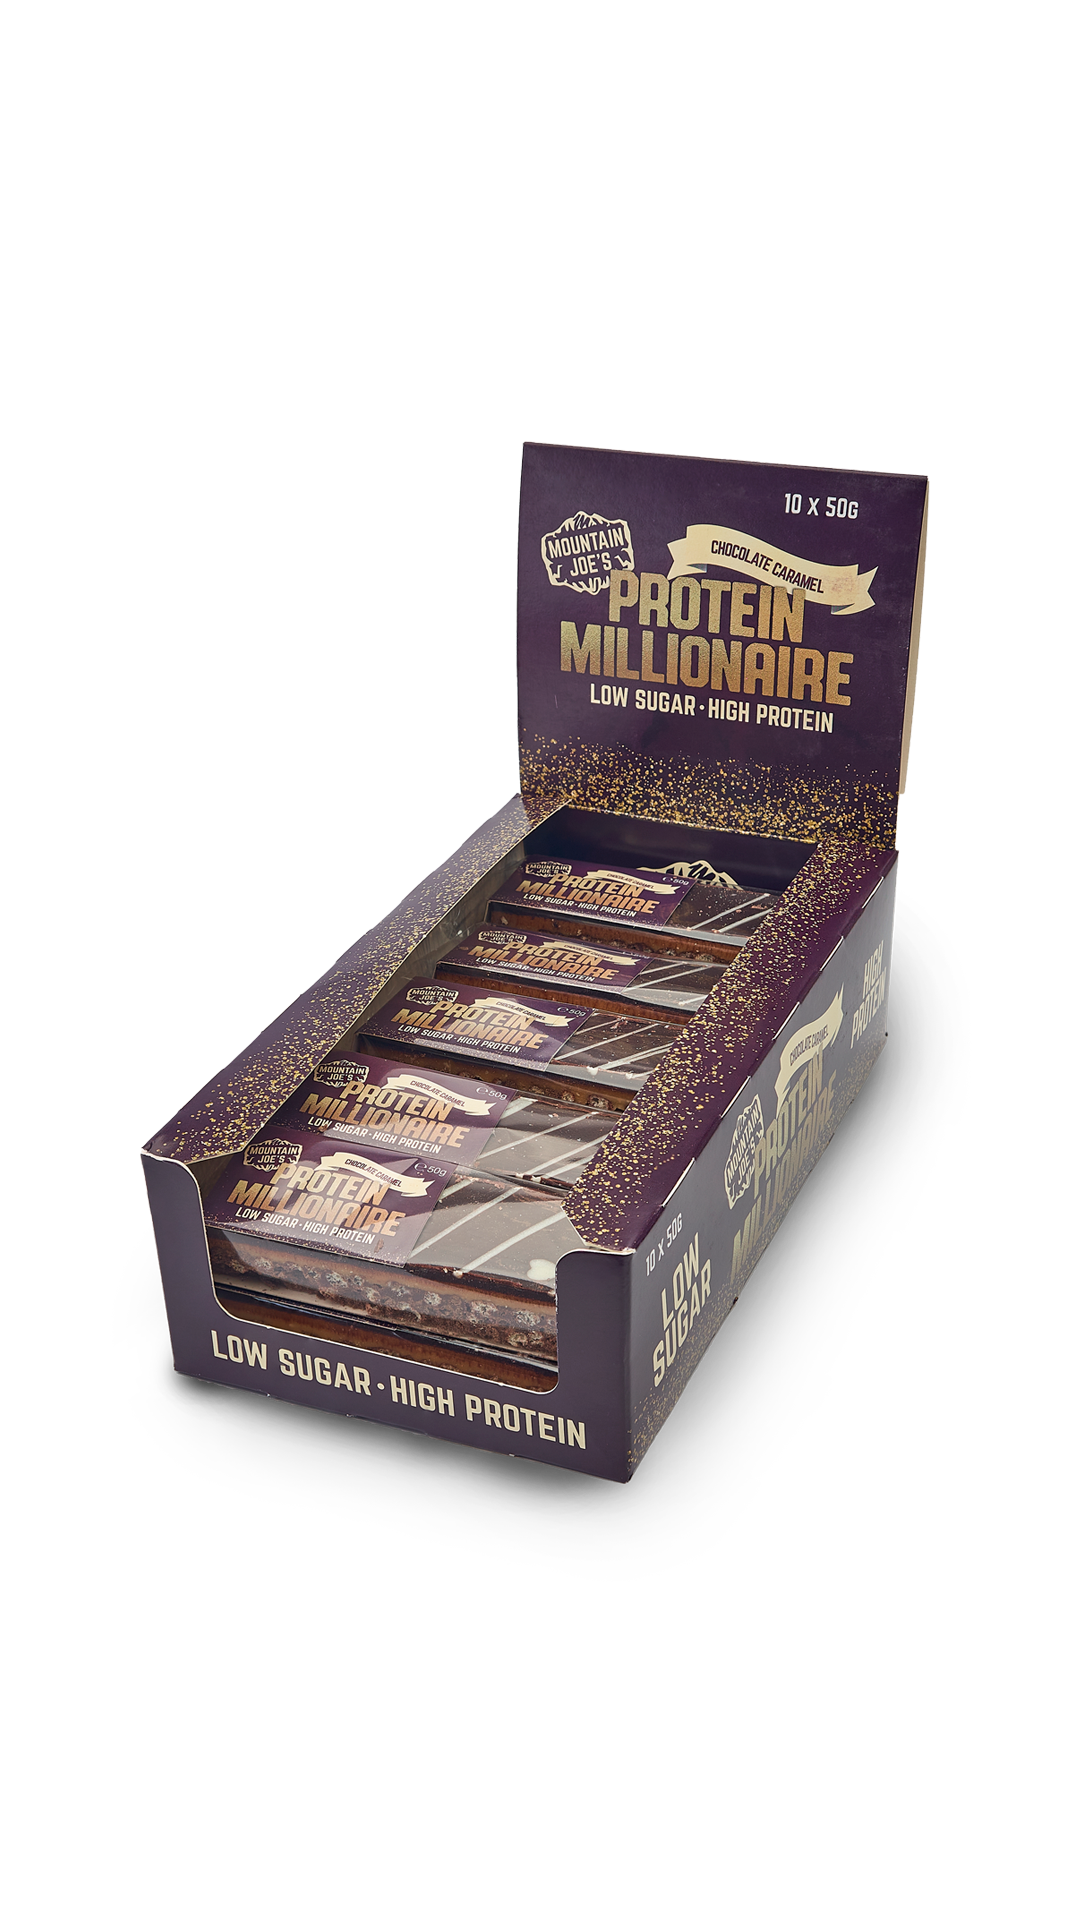 Mountain Joe's Chocolate Caramel Protein Millionaire (10x50g)